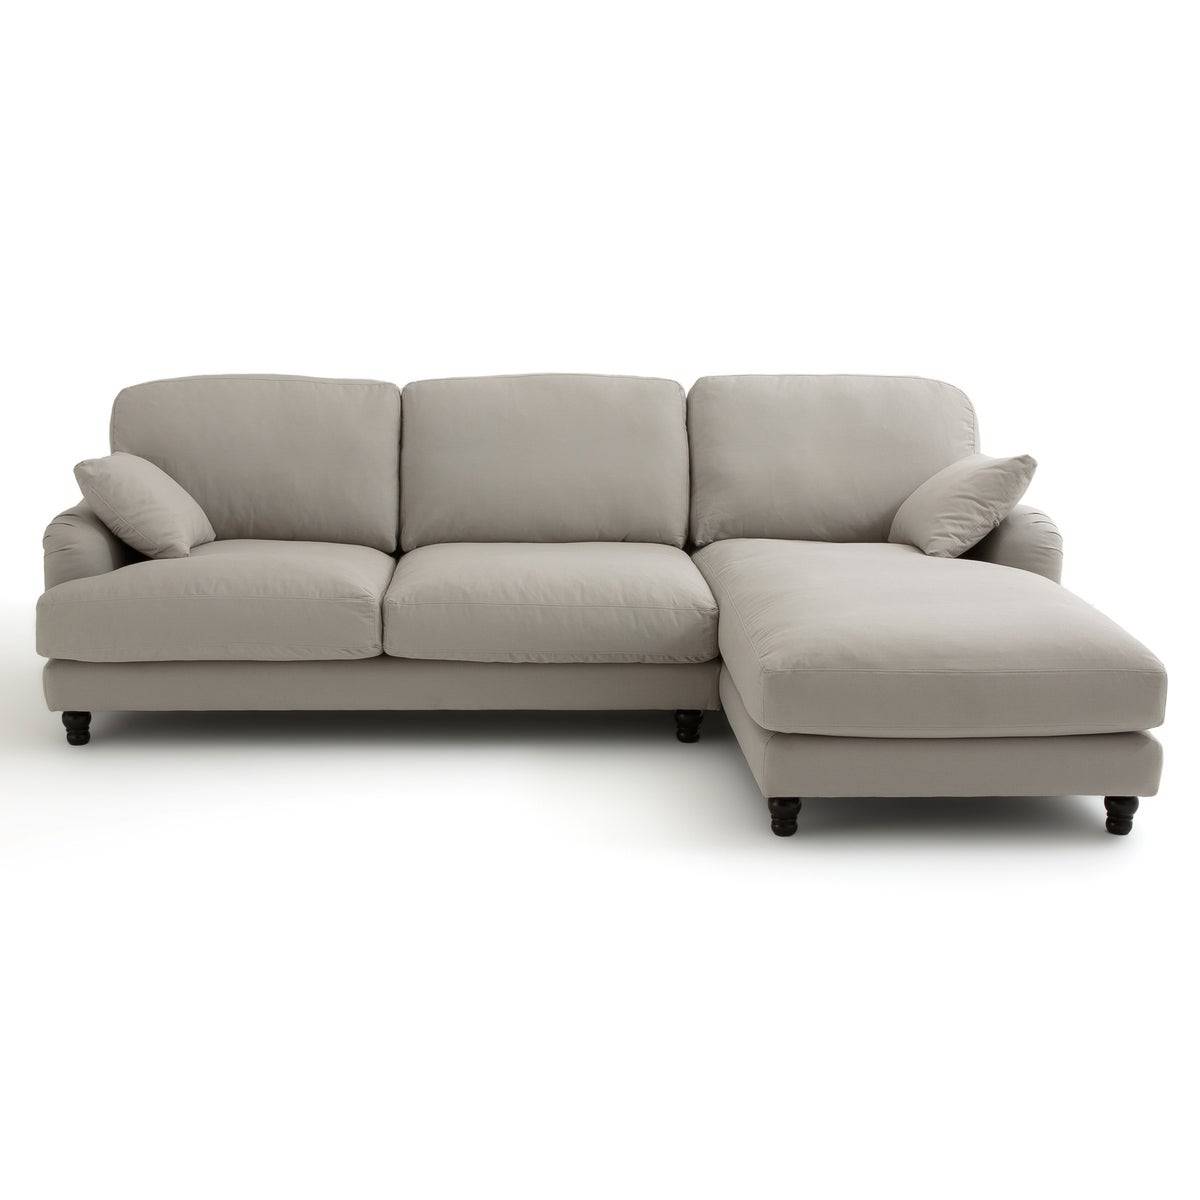 Sofá con chaise longue tapizado en algodón en color gris modelo Noon de La Redoute